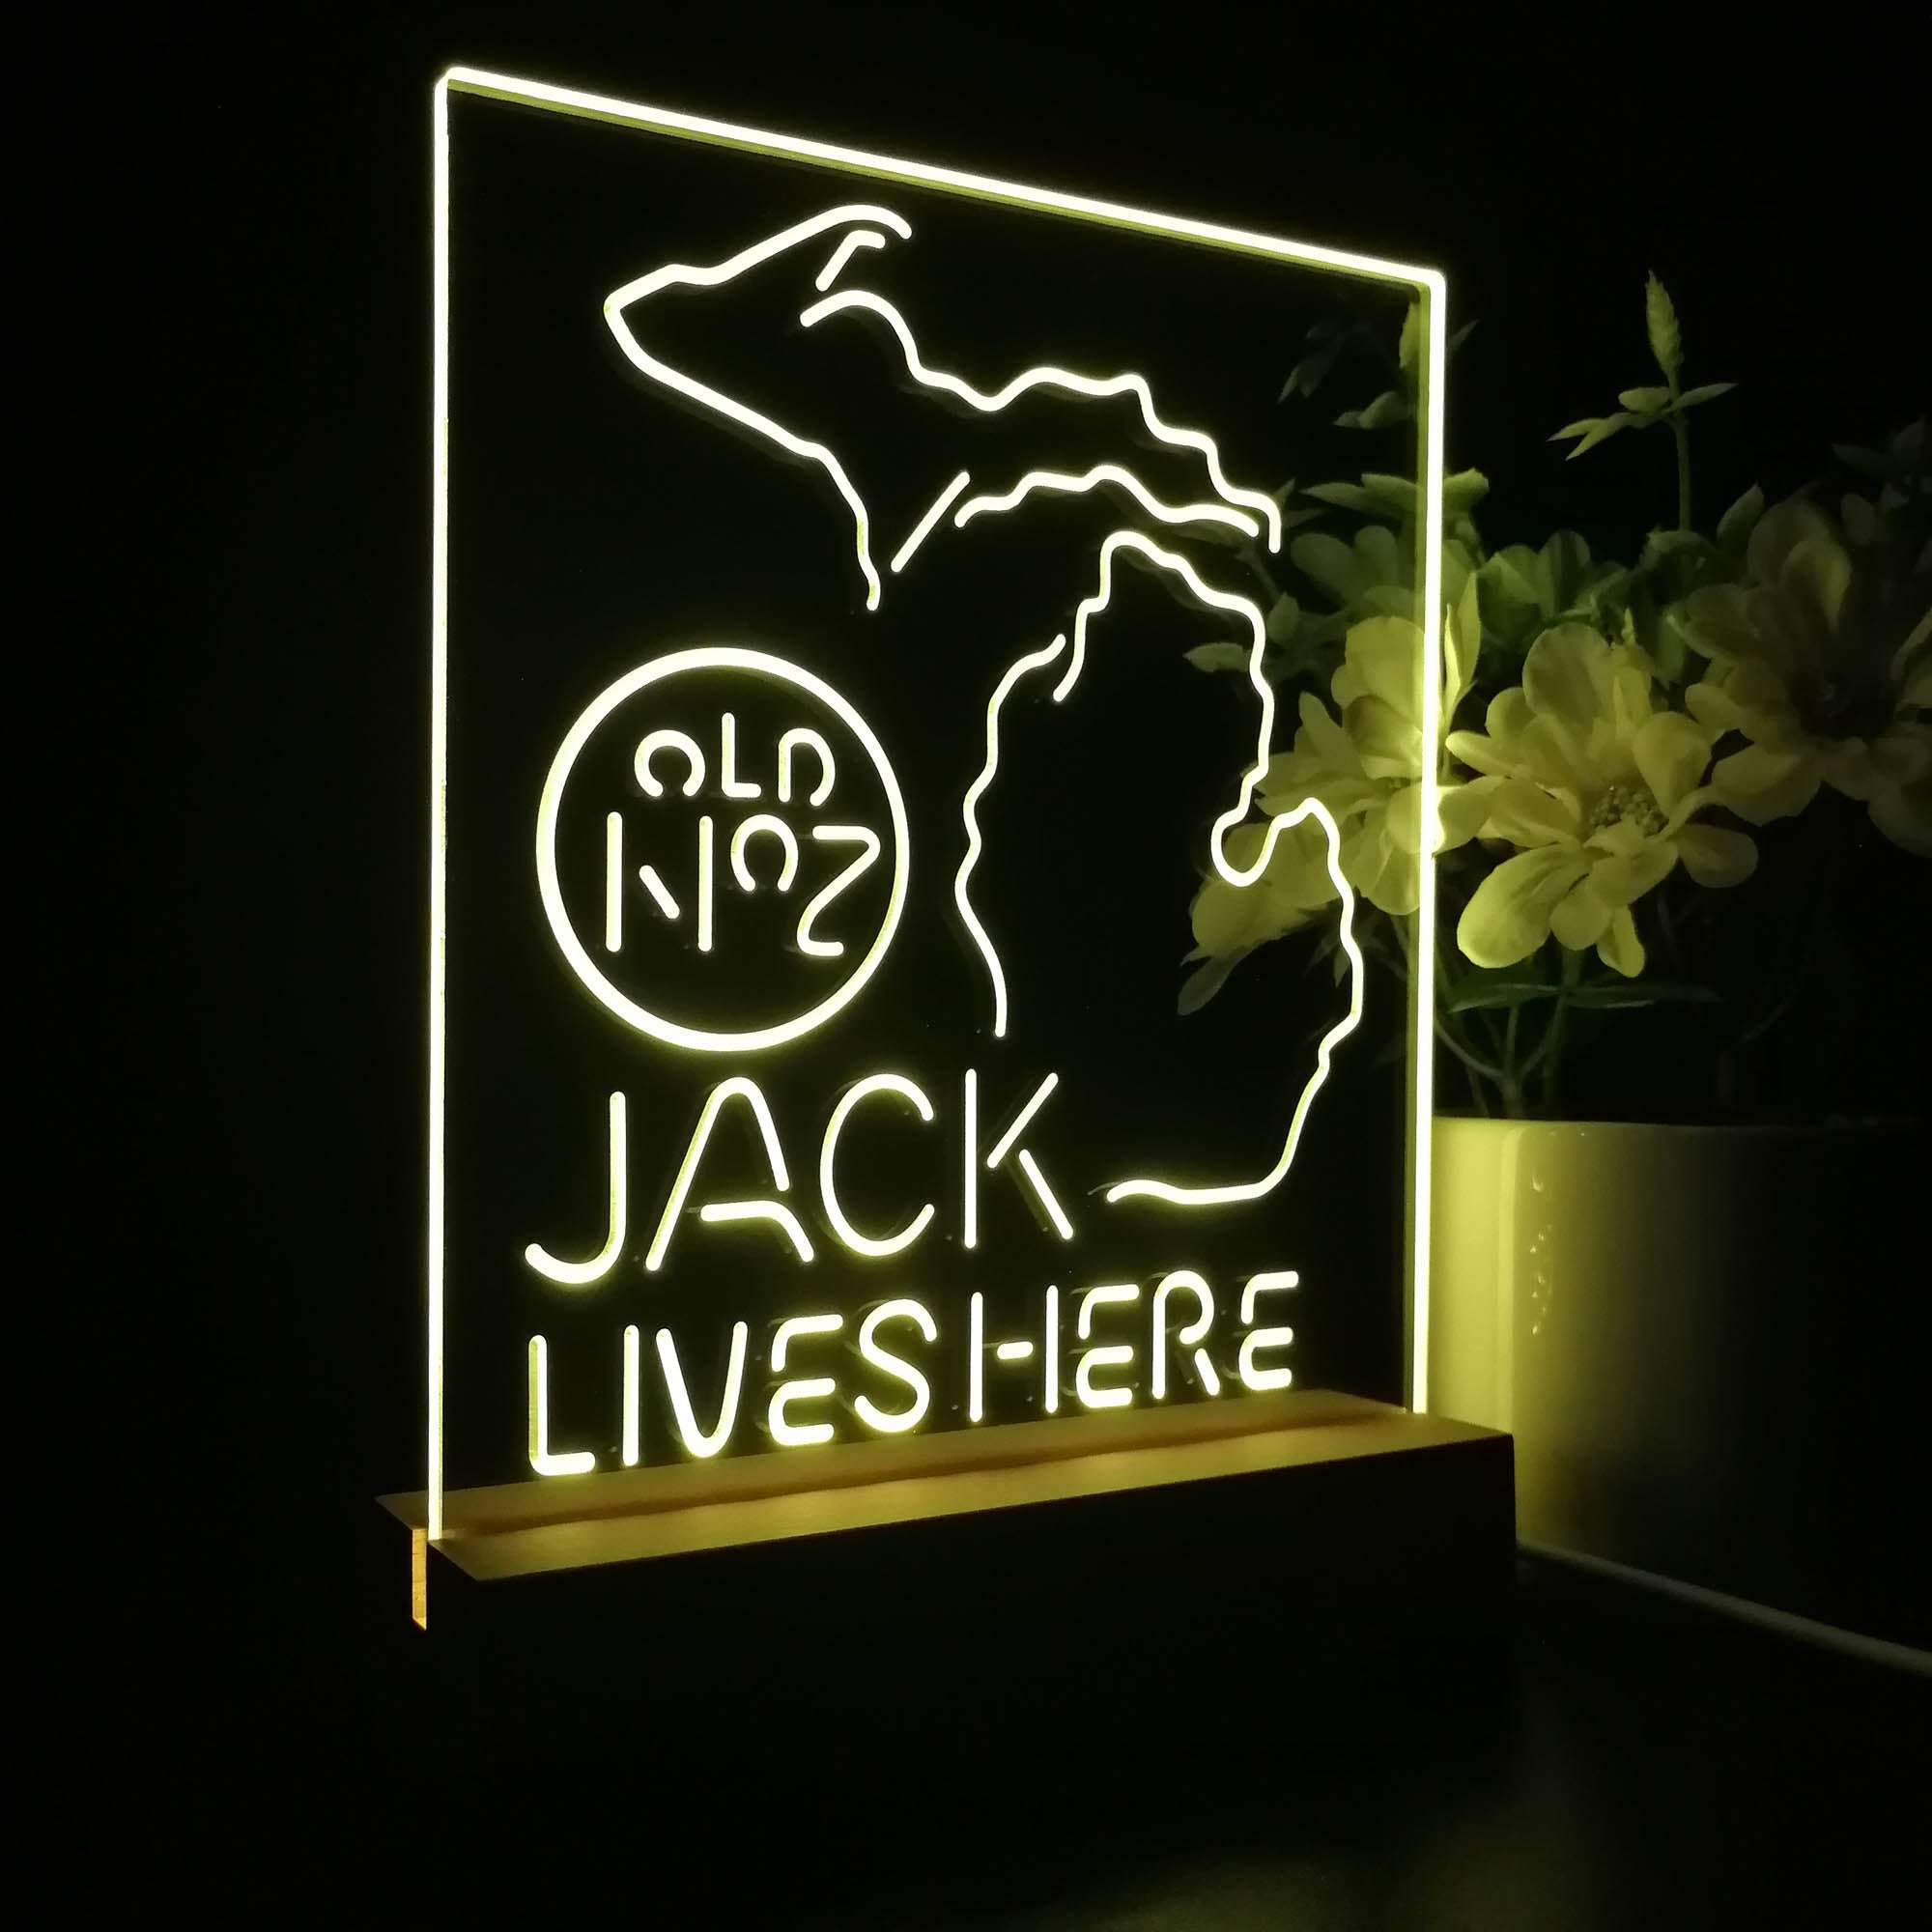 Michigan Jack Lives Here Night Light Neon Pub Bar Lamp